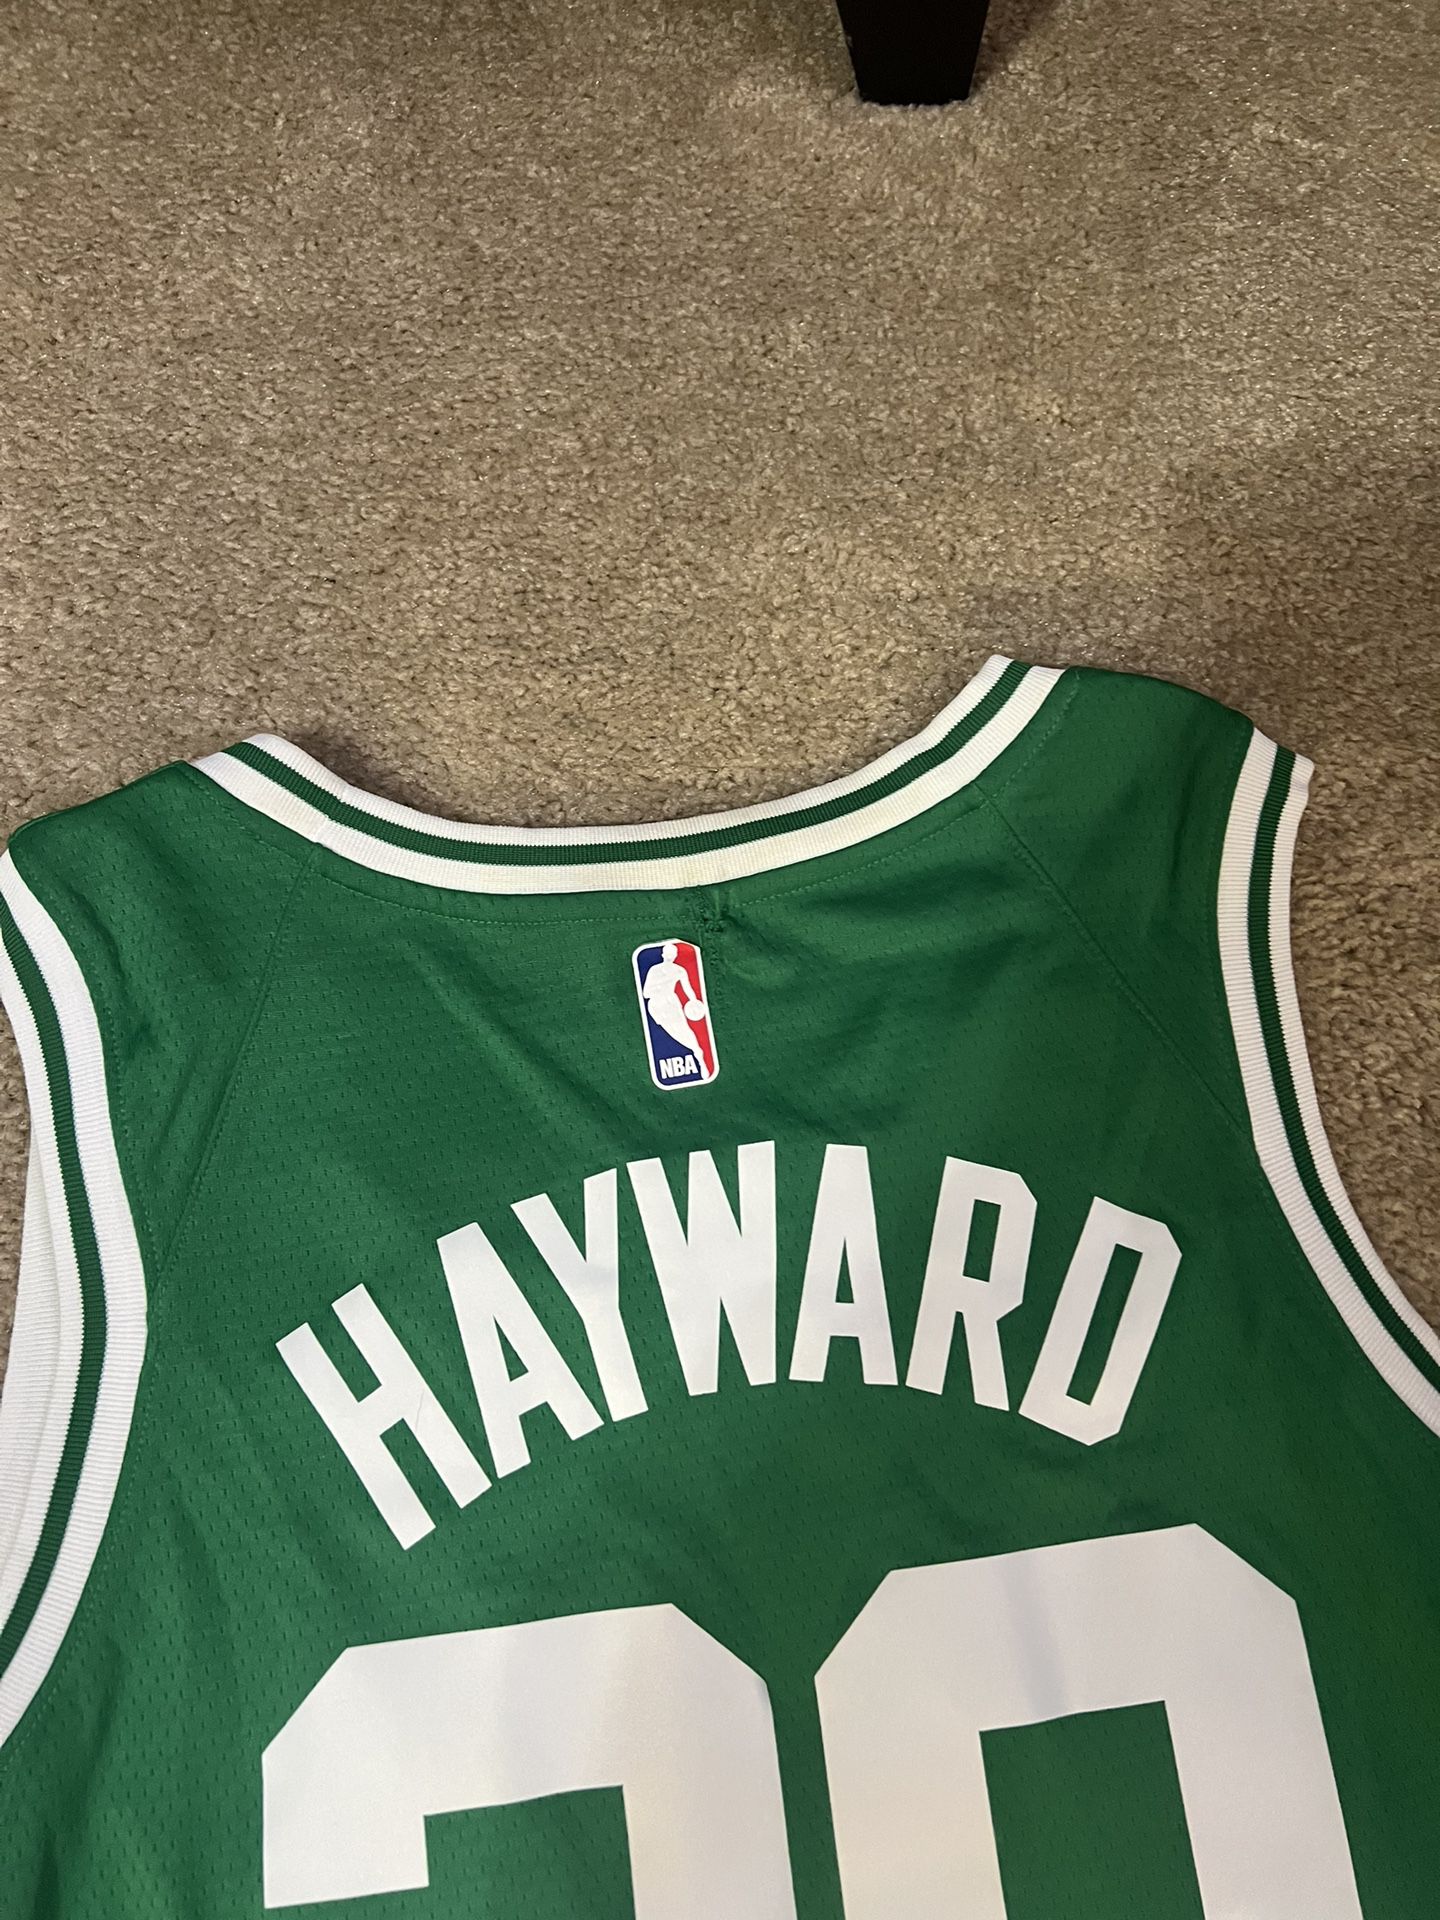 Gordon Hayward Celtics Association Edition Nike NBA Swingman